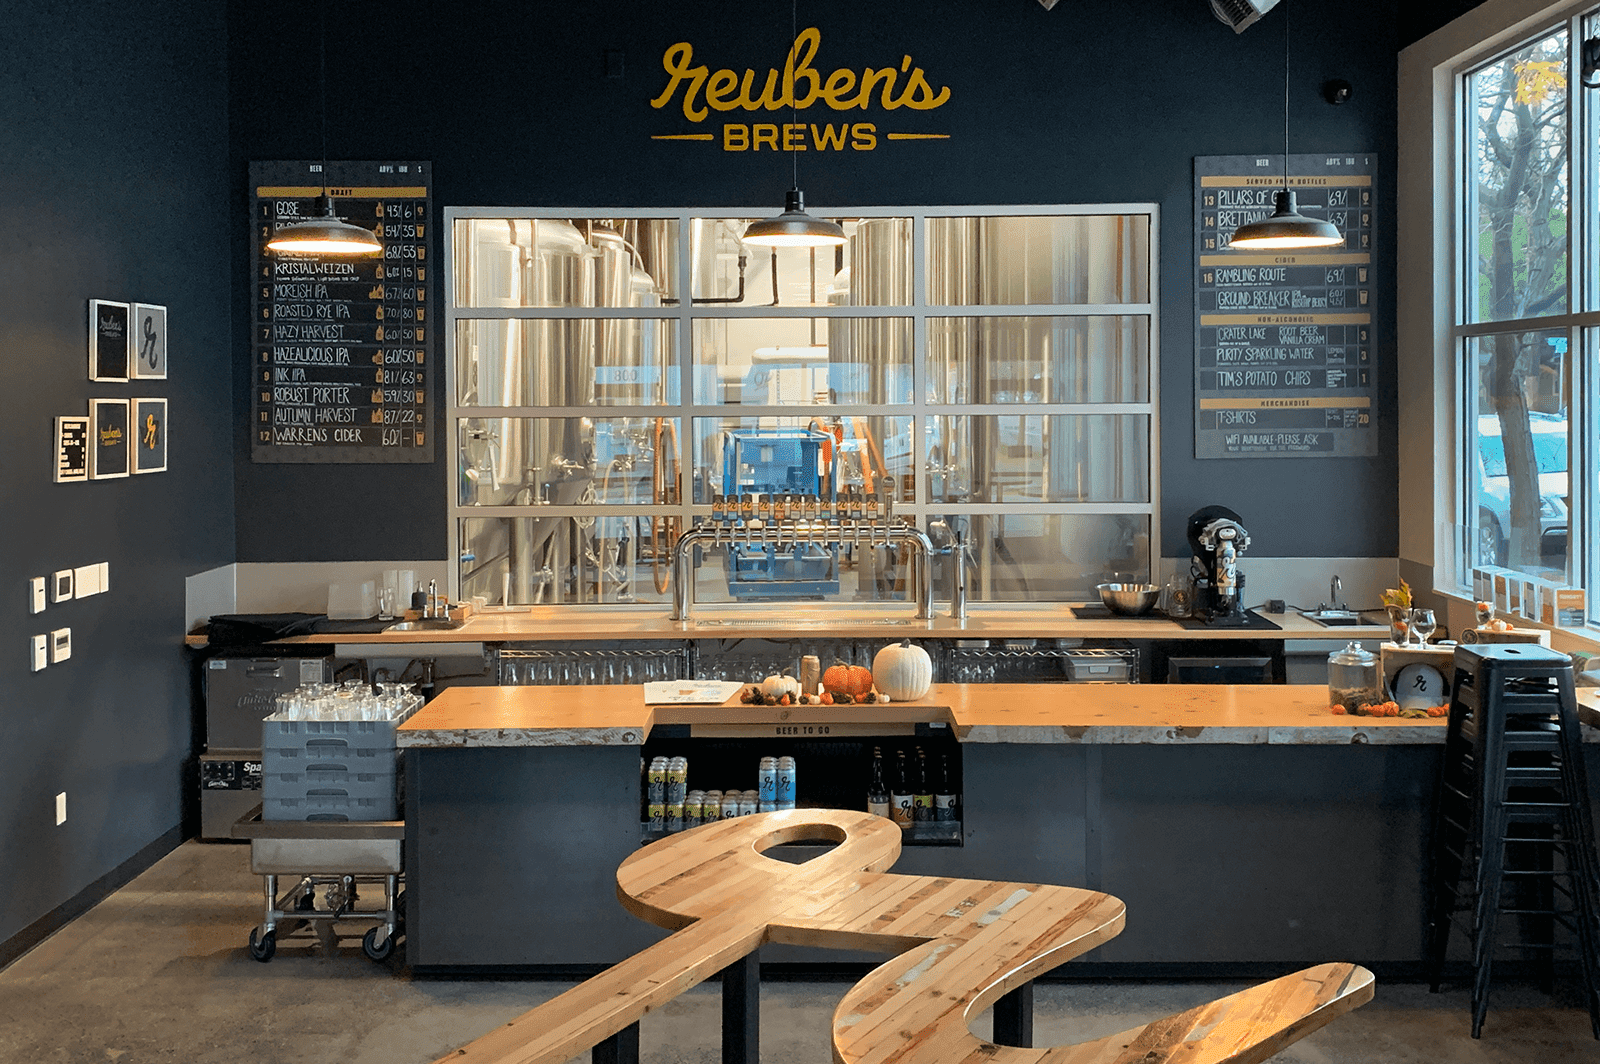 Reuben's Brews in Seattle, WA